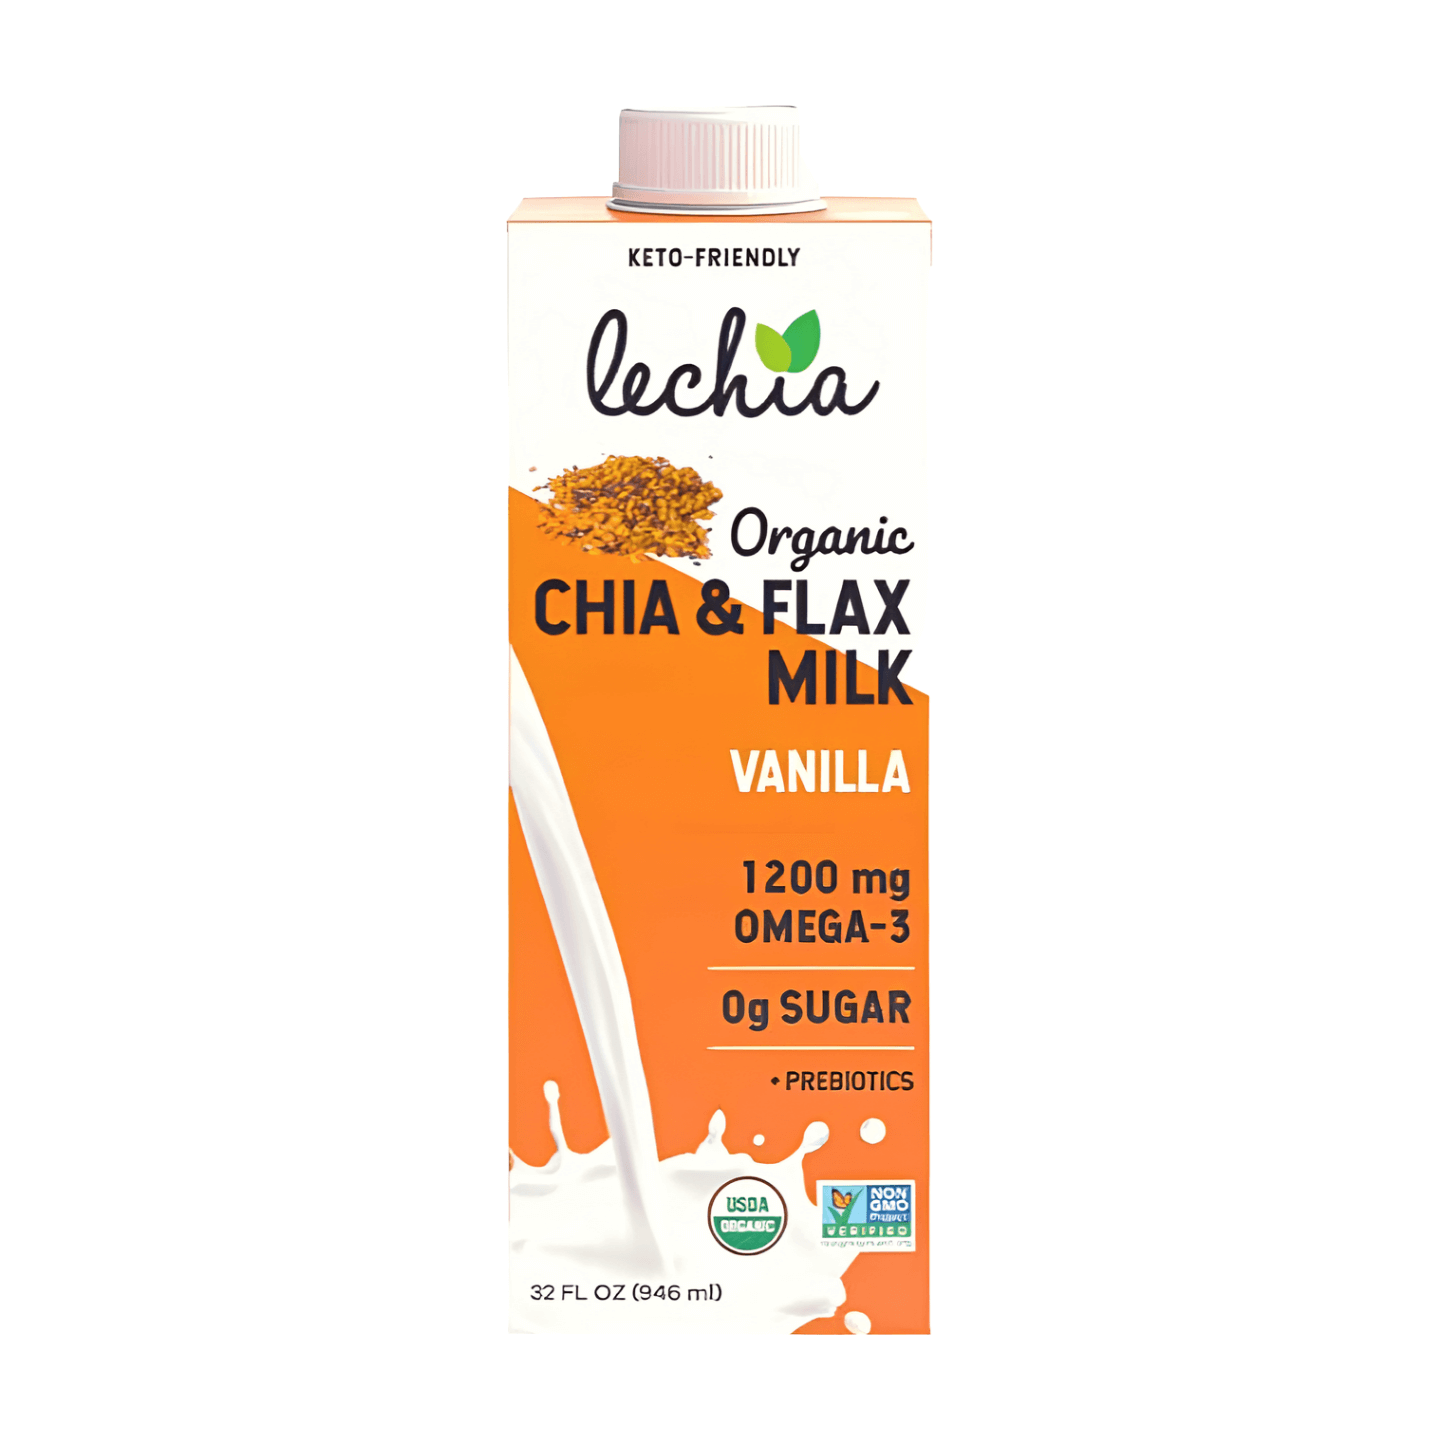 Lechia Chia & Flax Milk - Vanilla